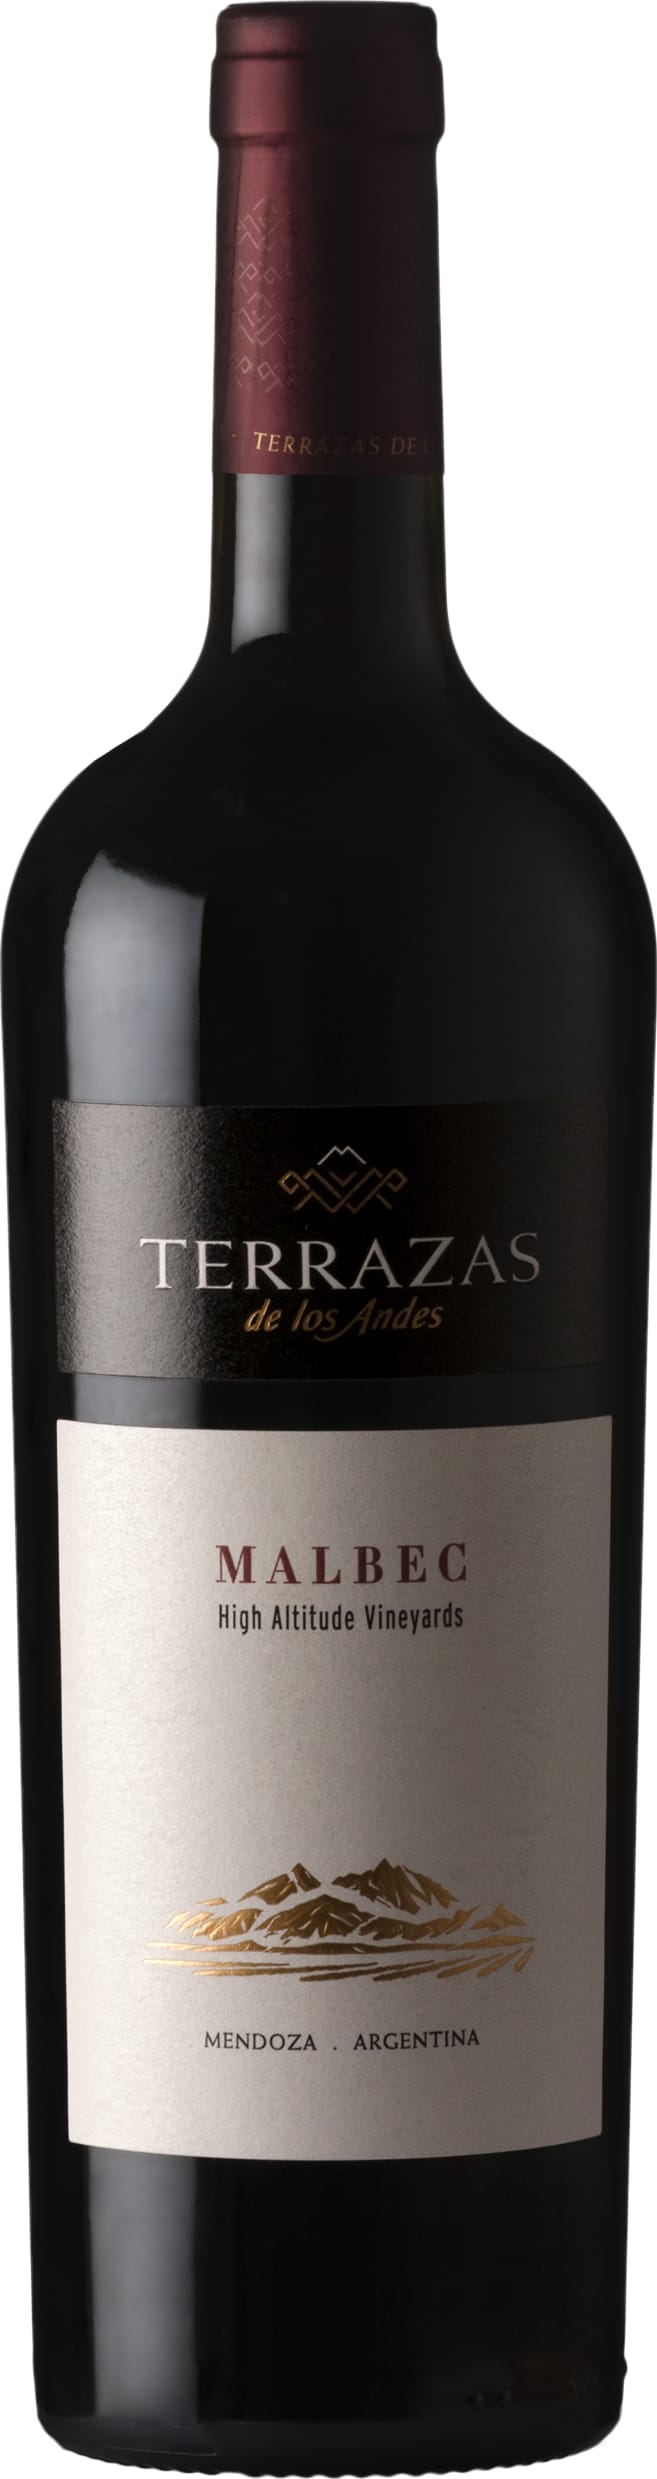 Terrazas Selection Malbec 2021 75cl - Buy Terrazas Wines from GREAT WINES DIRECT wine shop